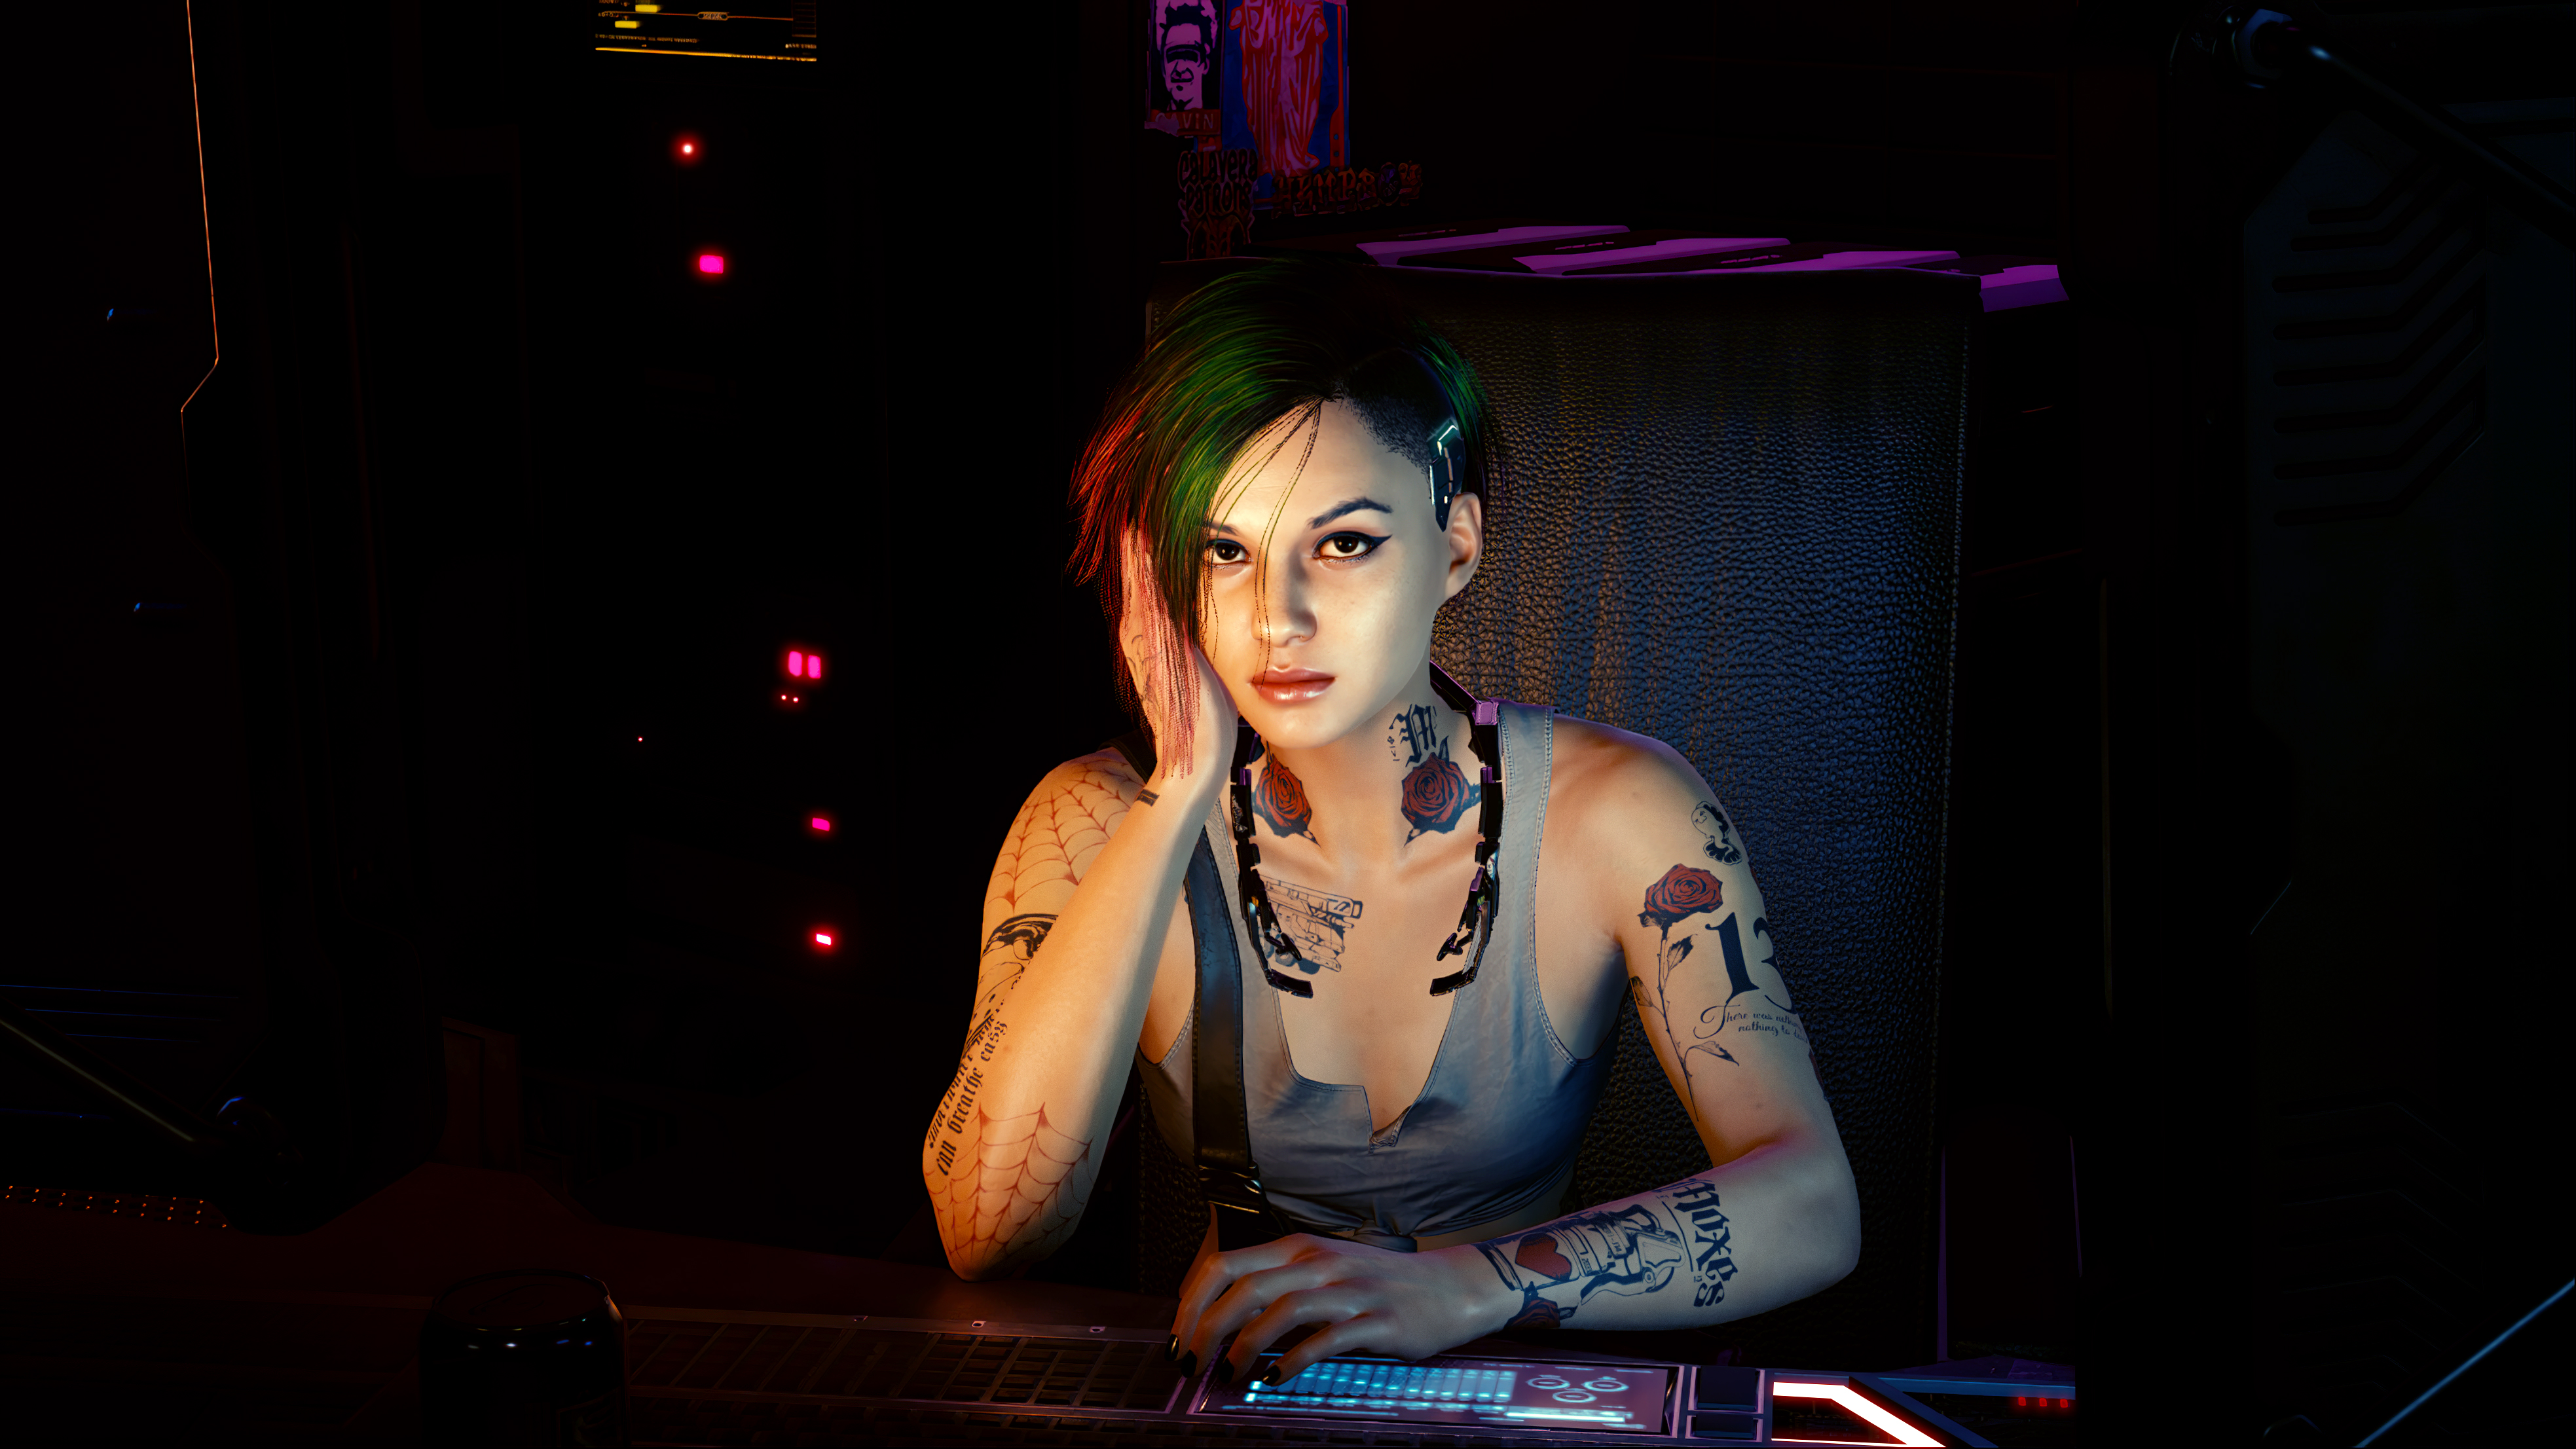 Judy Alvarez Cyberpunk 2077 Video Games Looking At Viewer Hand Gesture Hand On Head Desk Tattoo Gree 3934x2213